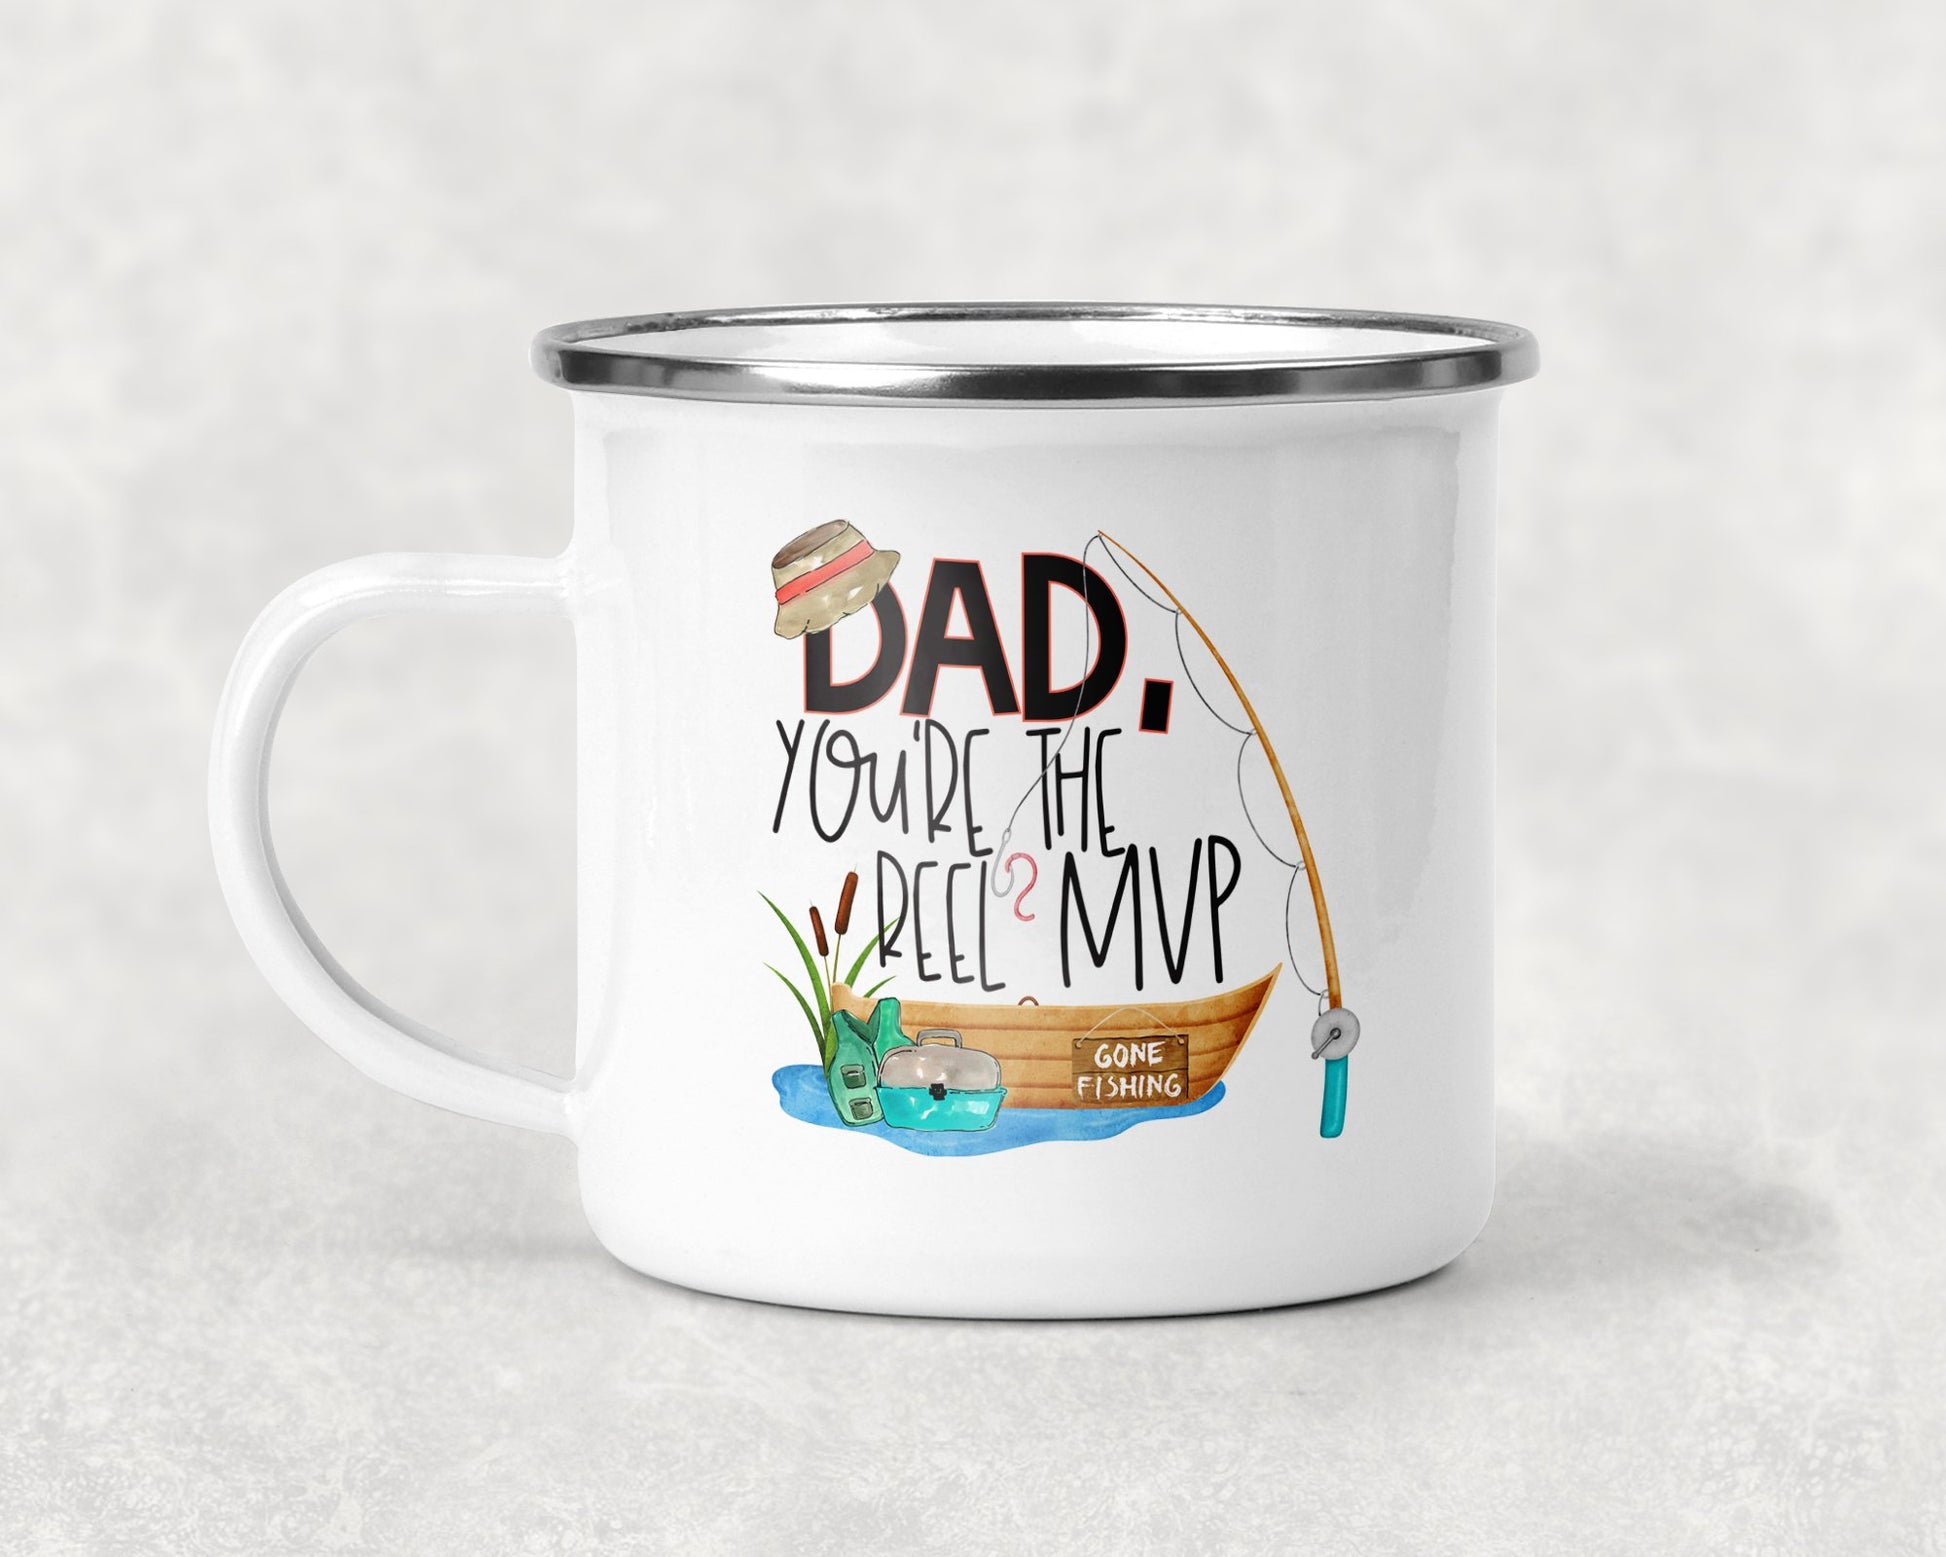 Dad Youre The Reel Mvp Mug Coffee